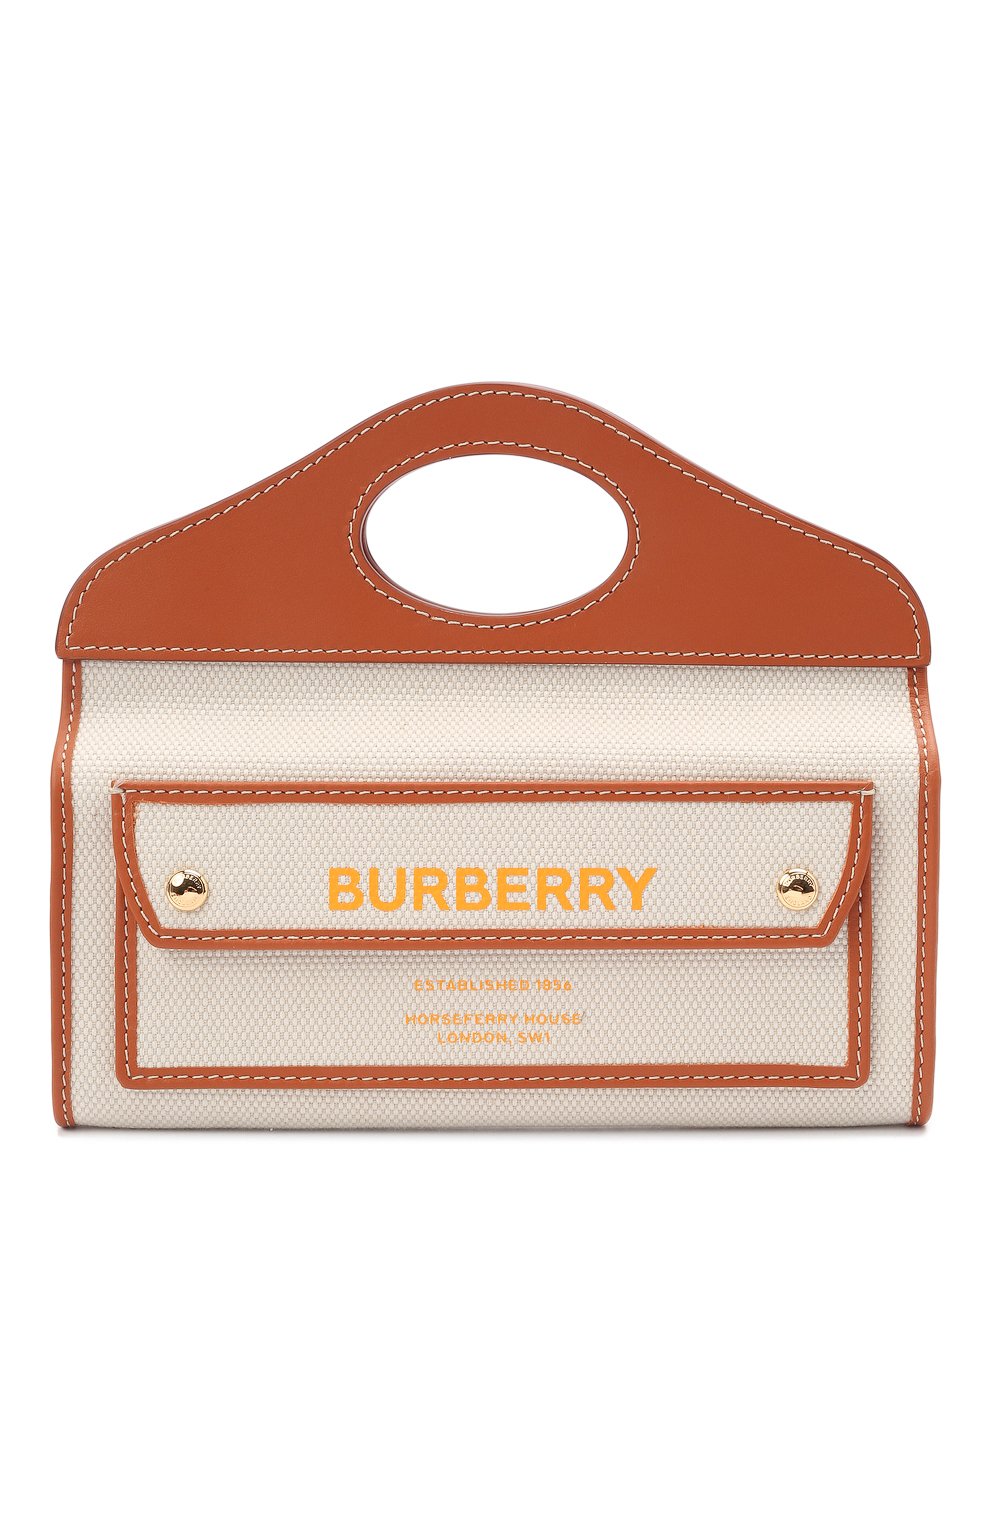 Женская сумка pocket small BURBERRY коричневого цвета, арт. 8036740 | Фото 1 (Сумки-т ехнические: Сумки через плечо, Сумки top-handle; Ремень/цепочка: На ремешке; Материал: Текстиль; Размер: small)